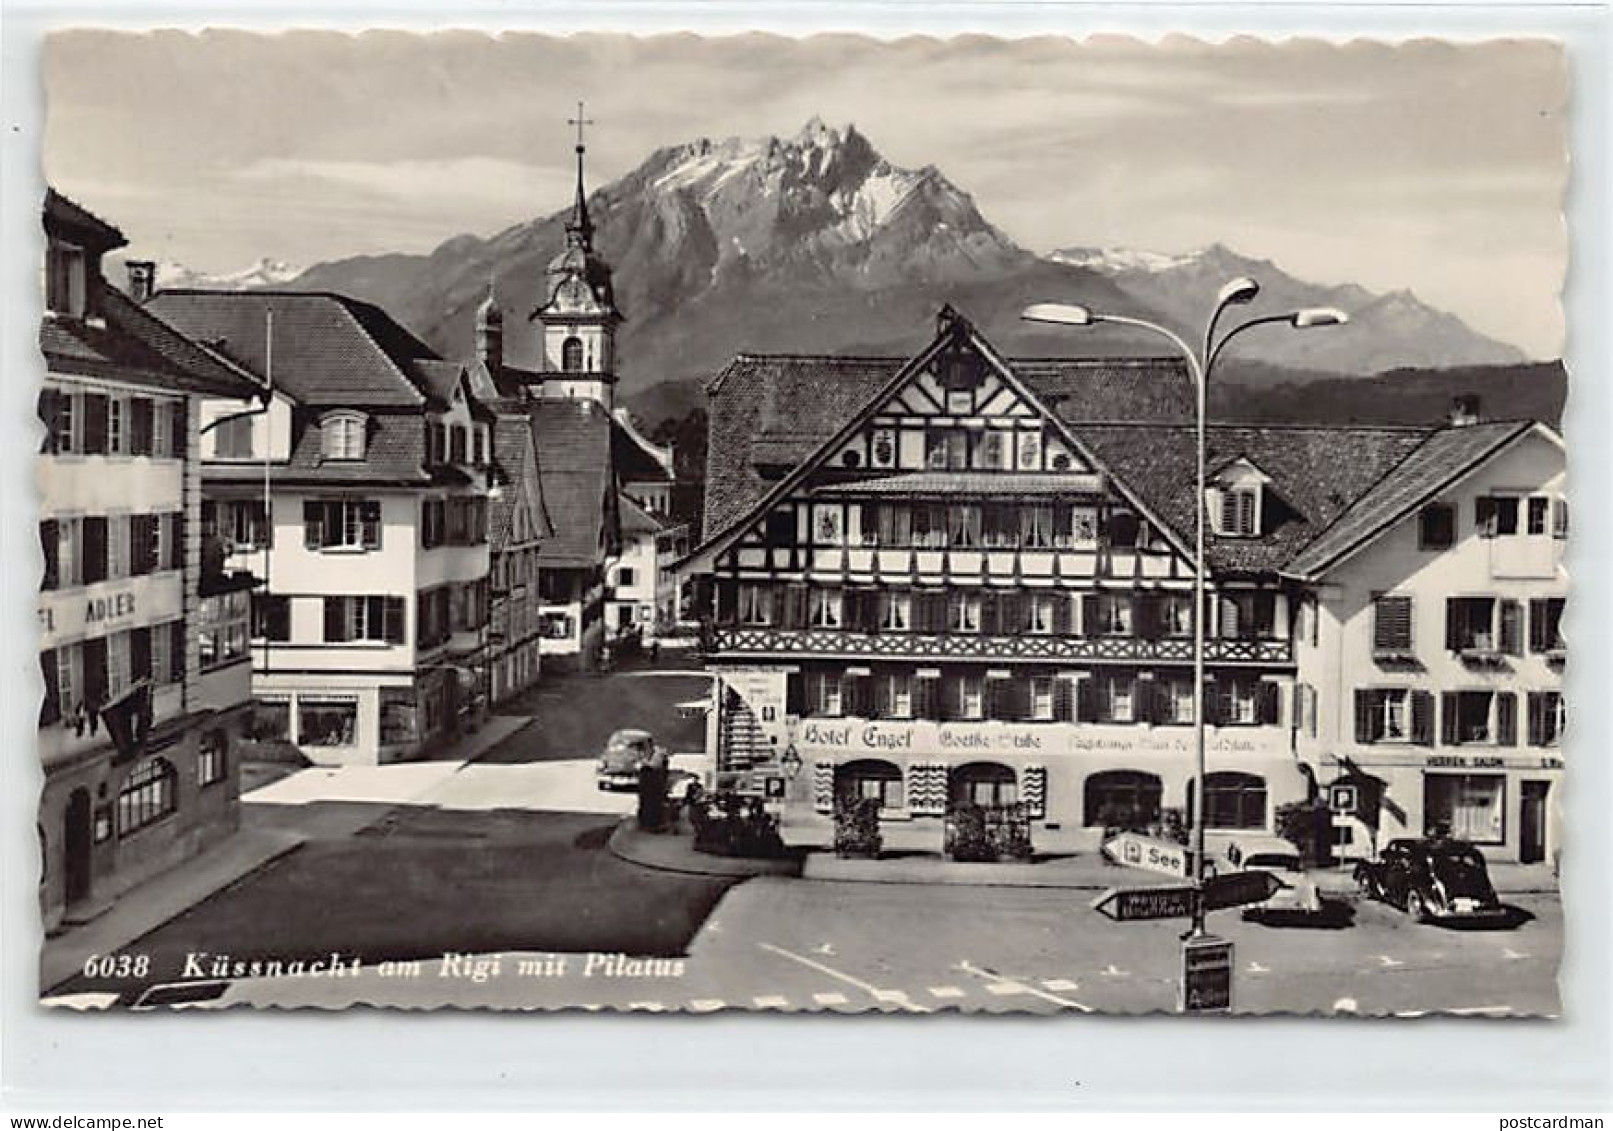 KÜSSNACHT (SZ) Hôtel Engel - Rigi - Pilatus - Verlag Rud. Suter 6038 - Küssnacht